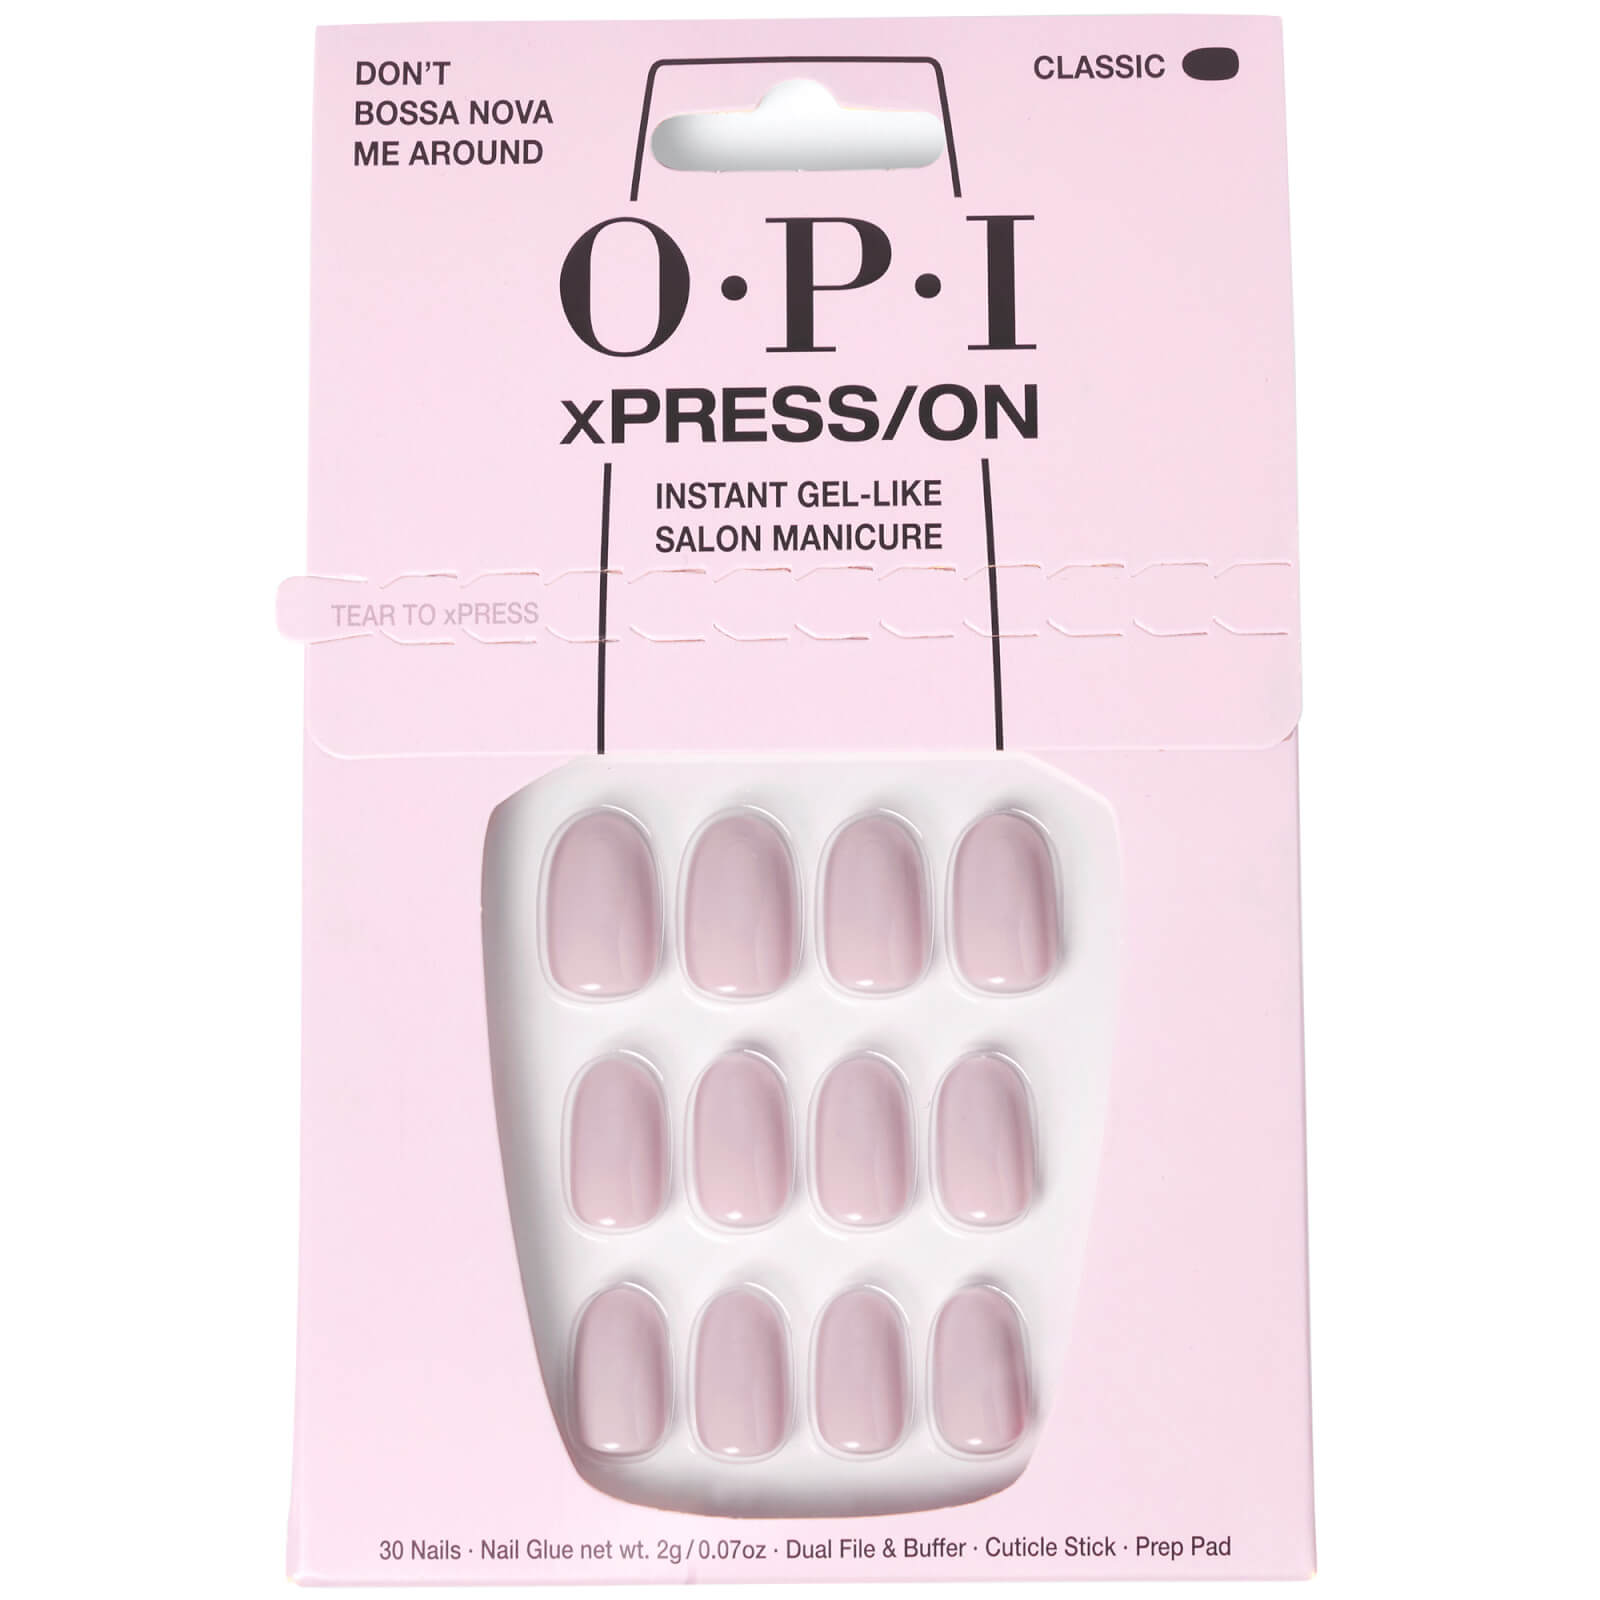 Opi Xpress/on - Don't Bossa Nova Me Around Press On Nails Gel-like Salon Manicure In Pink